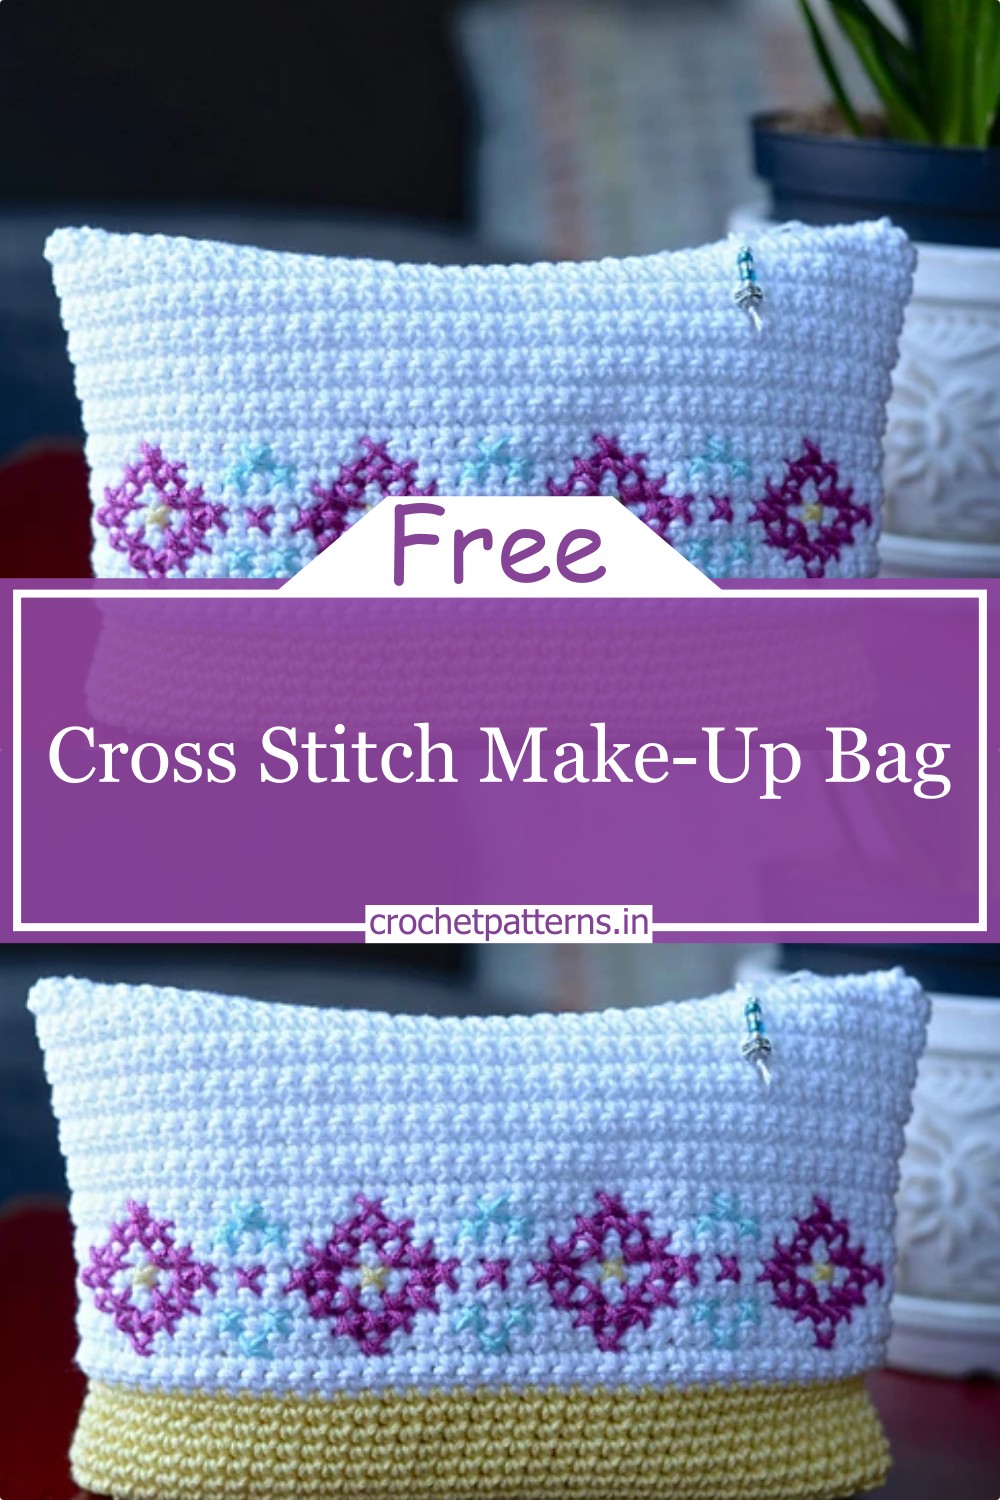 Cross Stitch Make-Up Bag